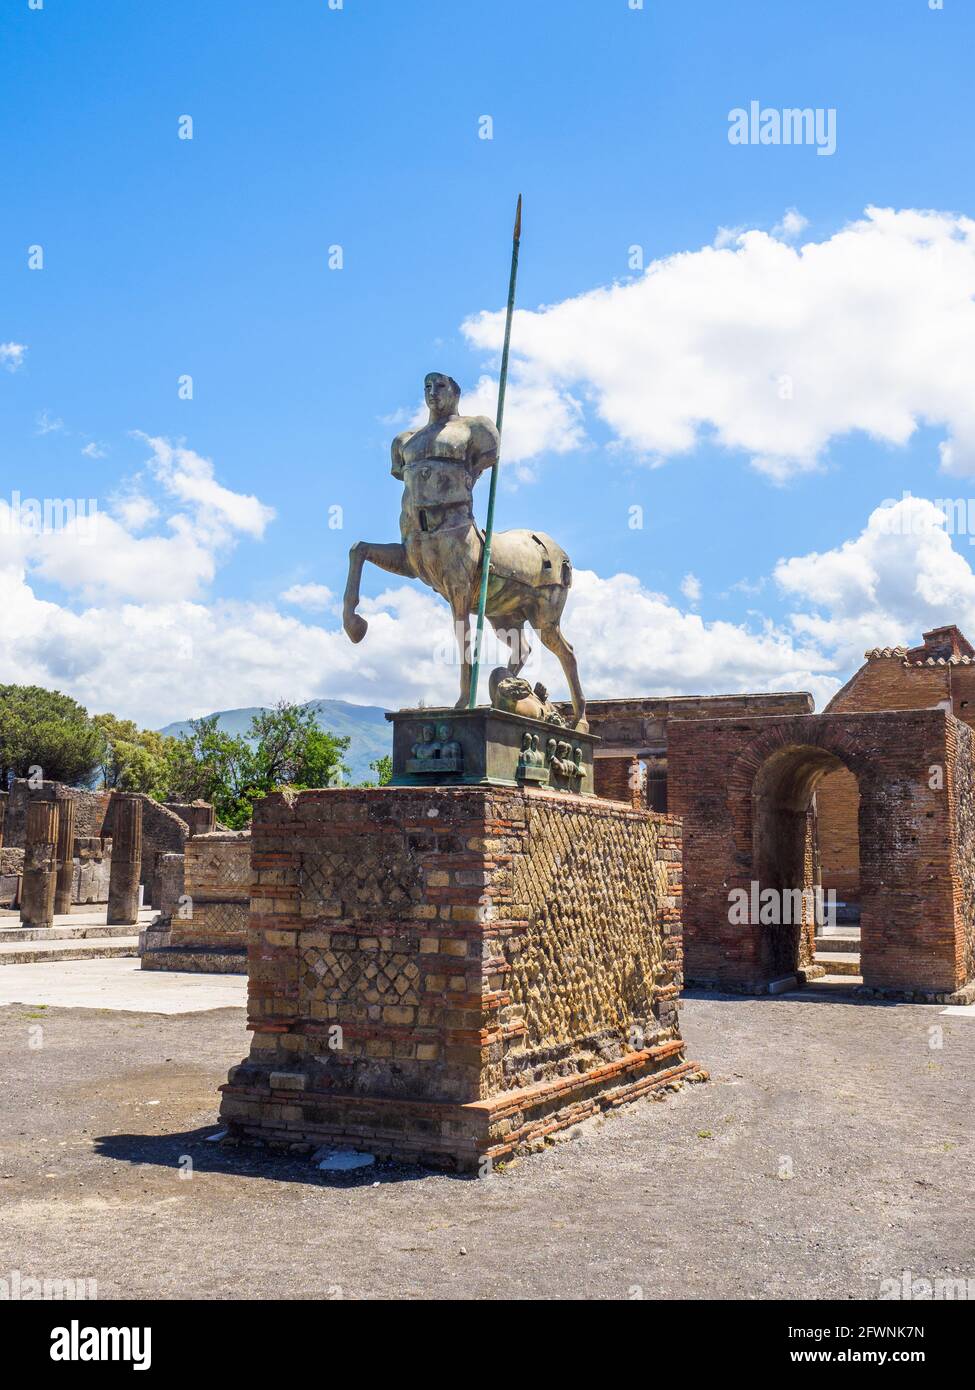 Centaur statue of the Polish sculptor Igor Mitoraj at Pompei Forum - Pompeii archaeological site, Italy Stock Photo